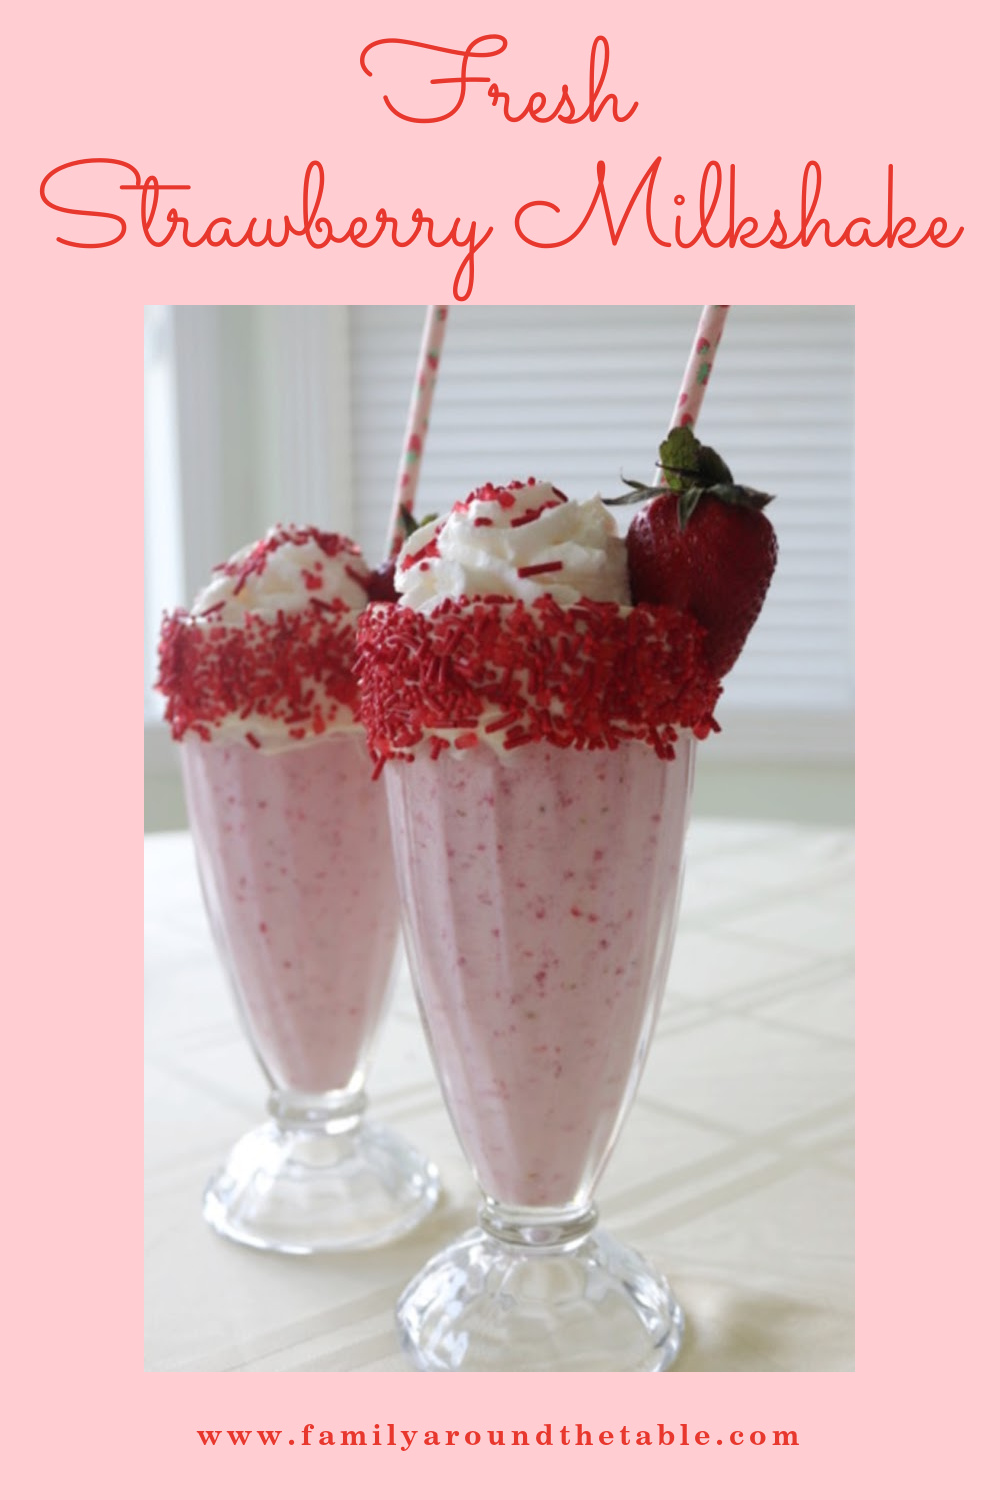 Fresh Strawberry Milkshake Pinterest image.